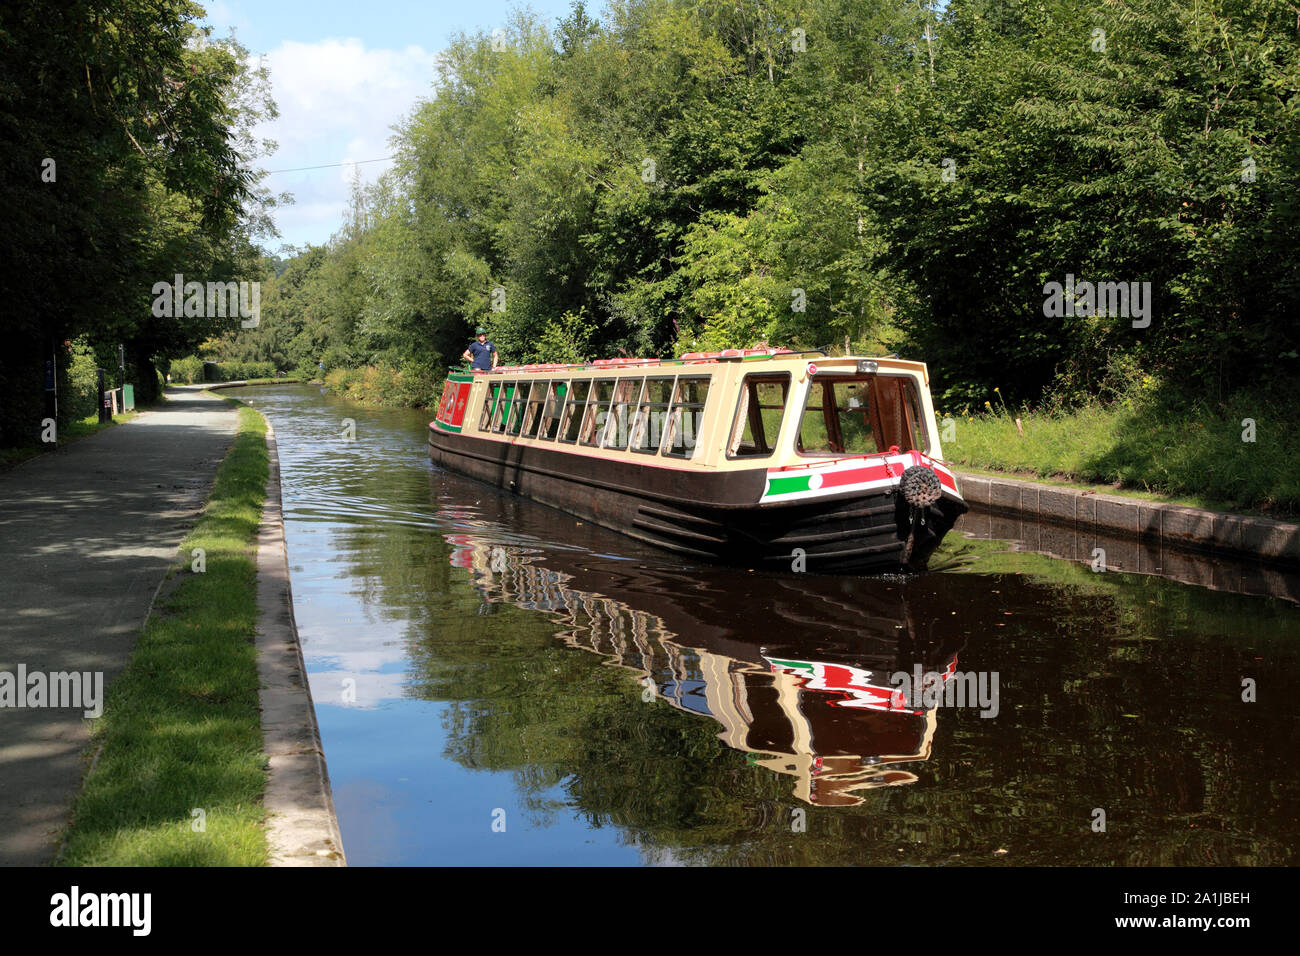 The trip boat “Thomas Telford” on the Llangollen Canal near Llangollen Wharf, Wales Stock Photo